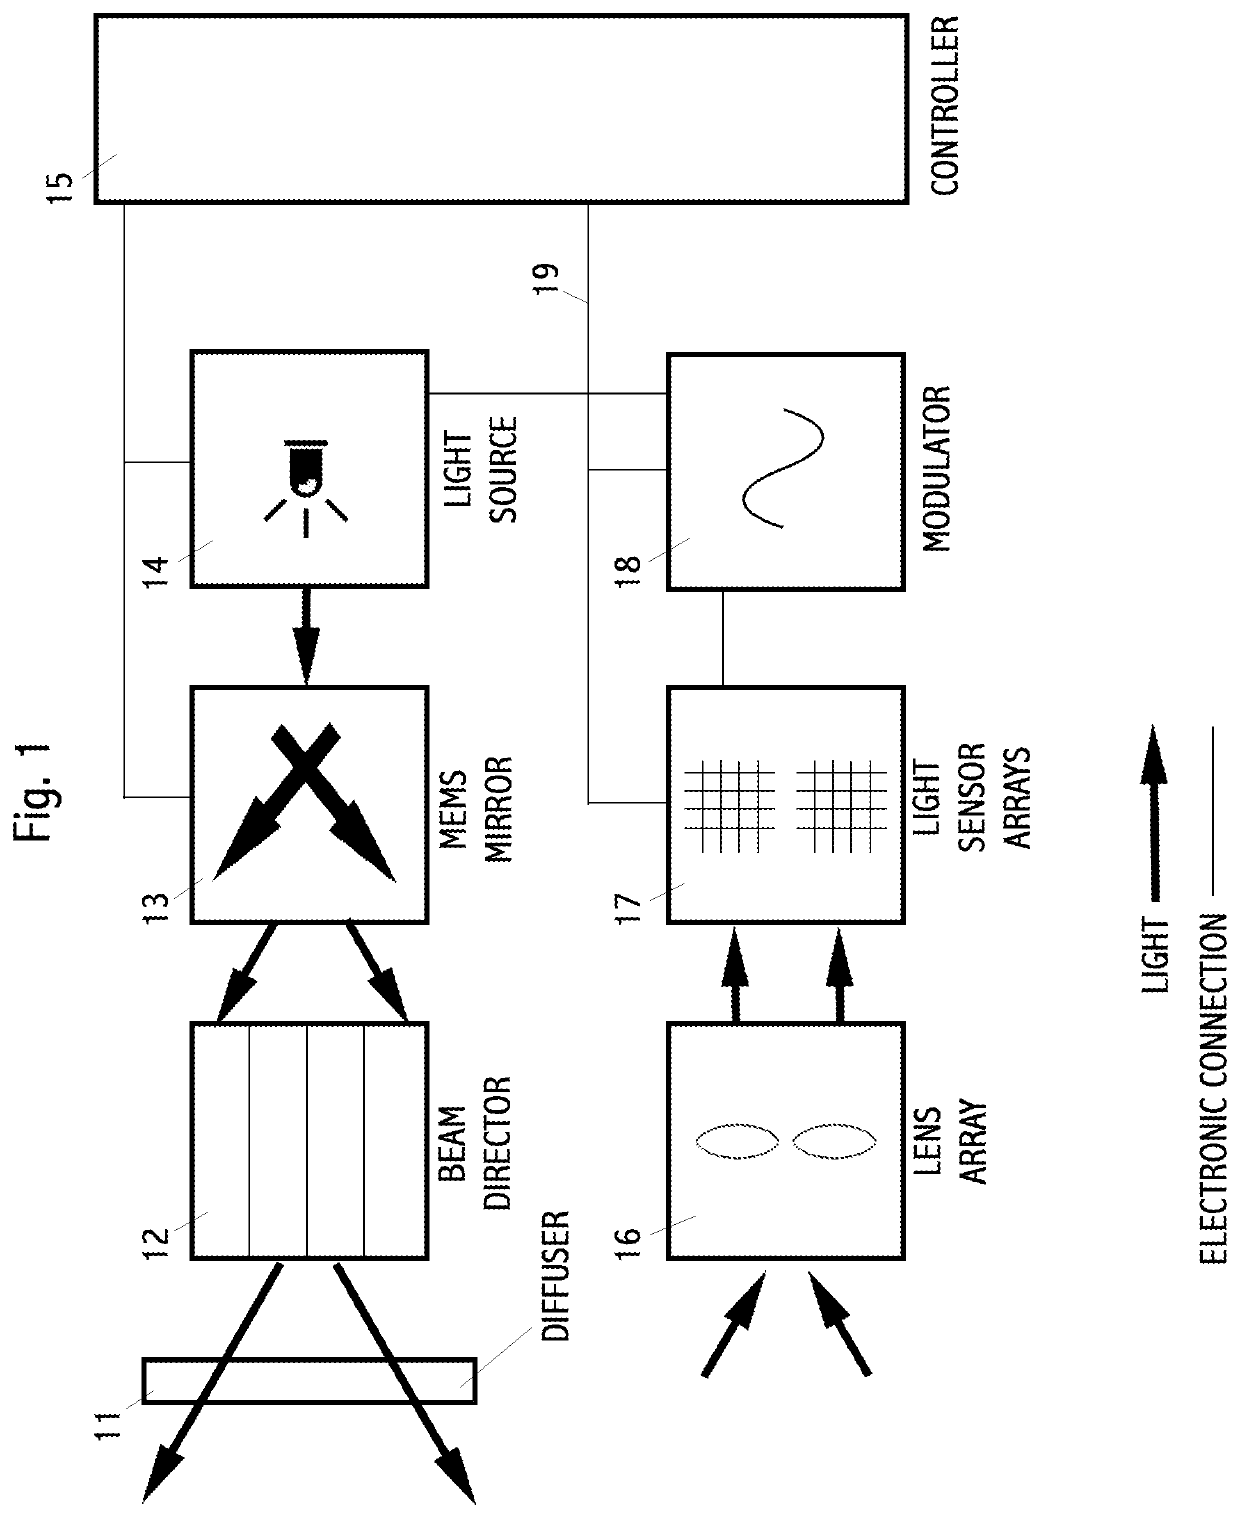 Device and method of optical range imaging